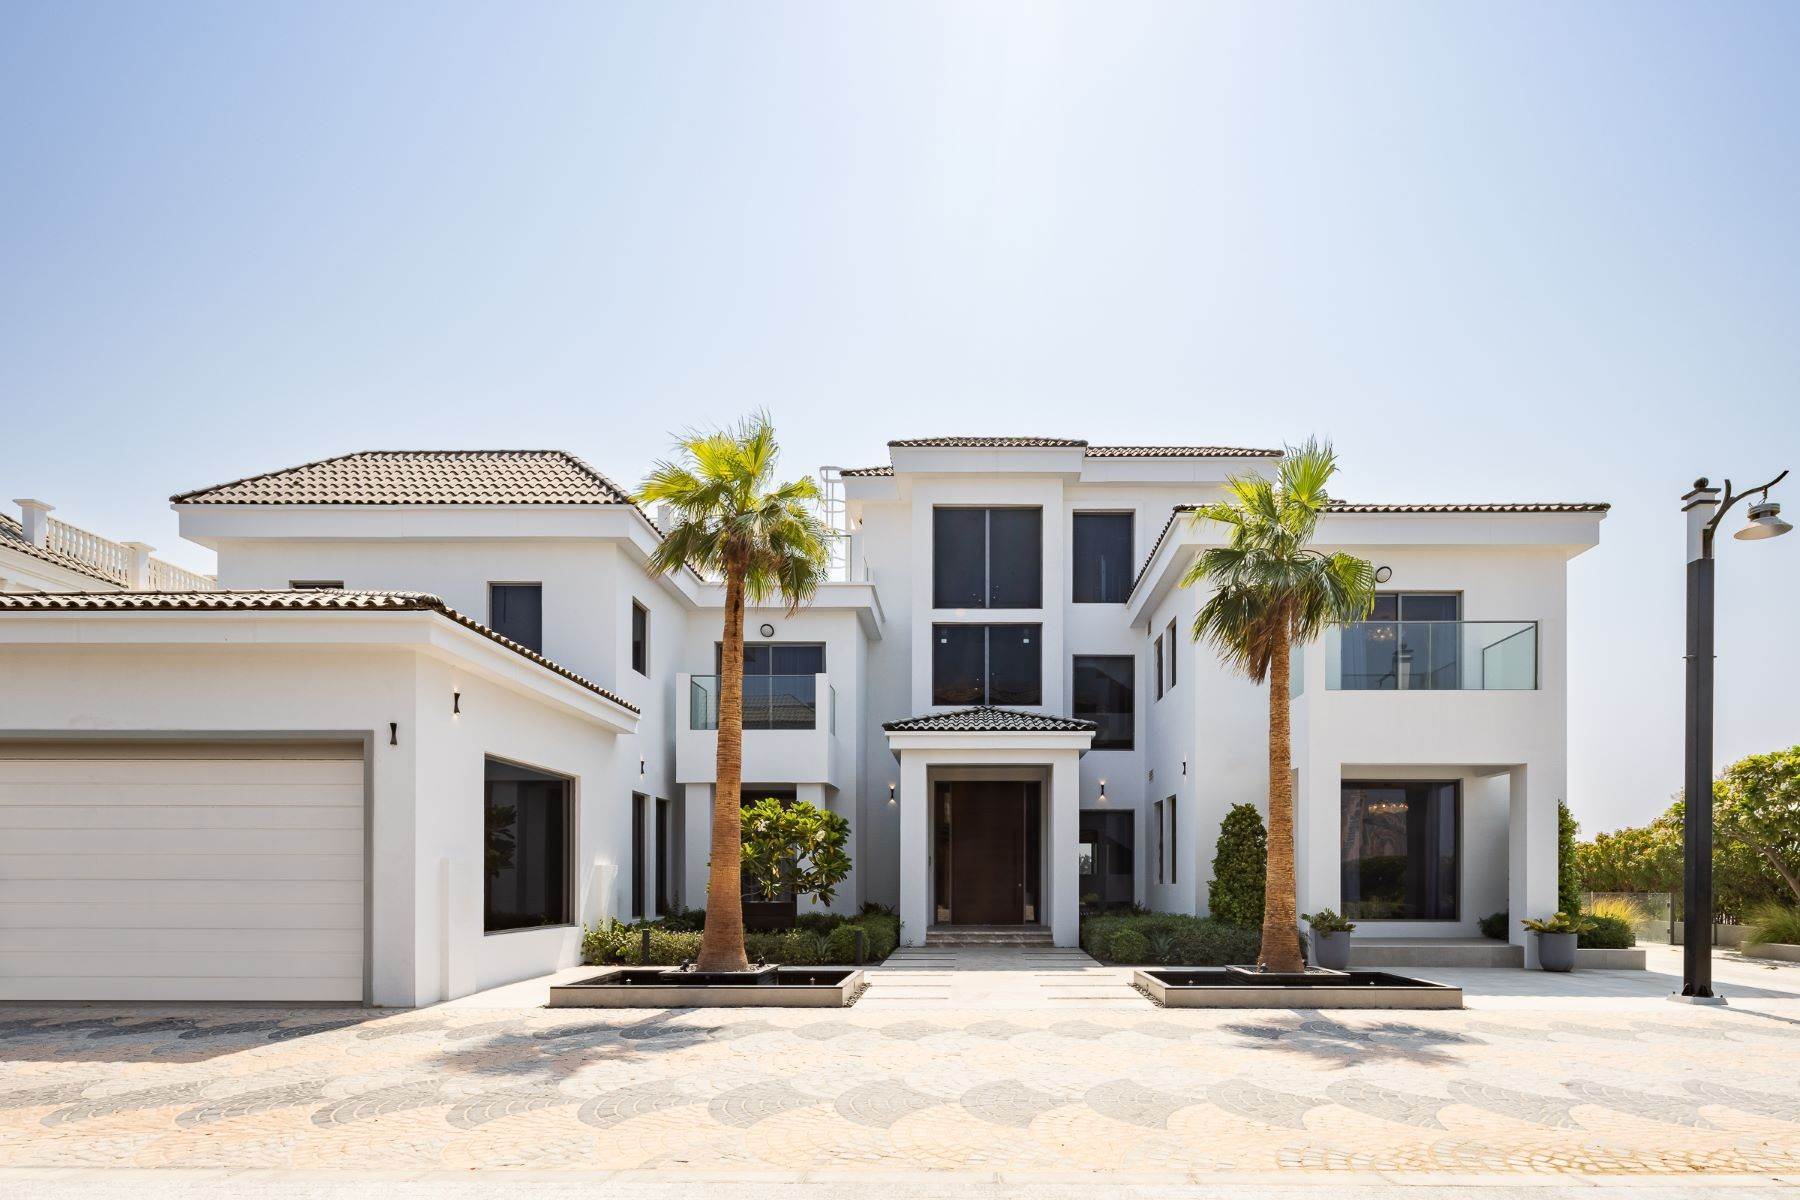 11. Other Residential Homes at Dubai, Dubai United Arab Emirates